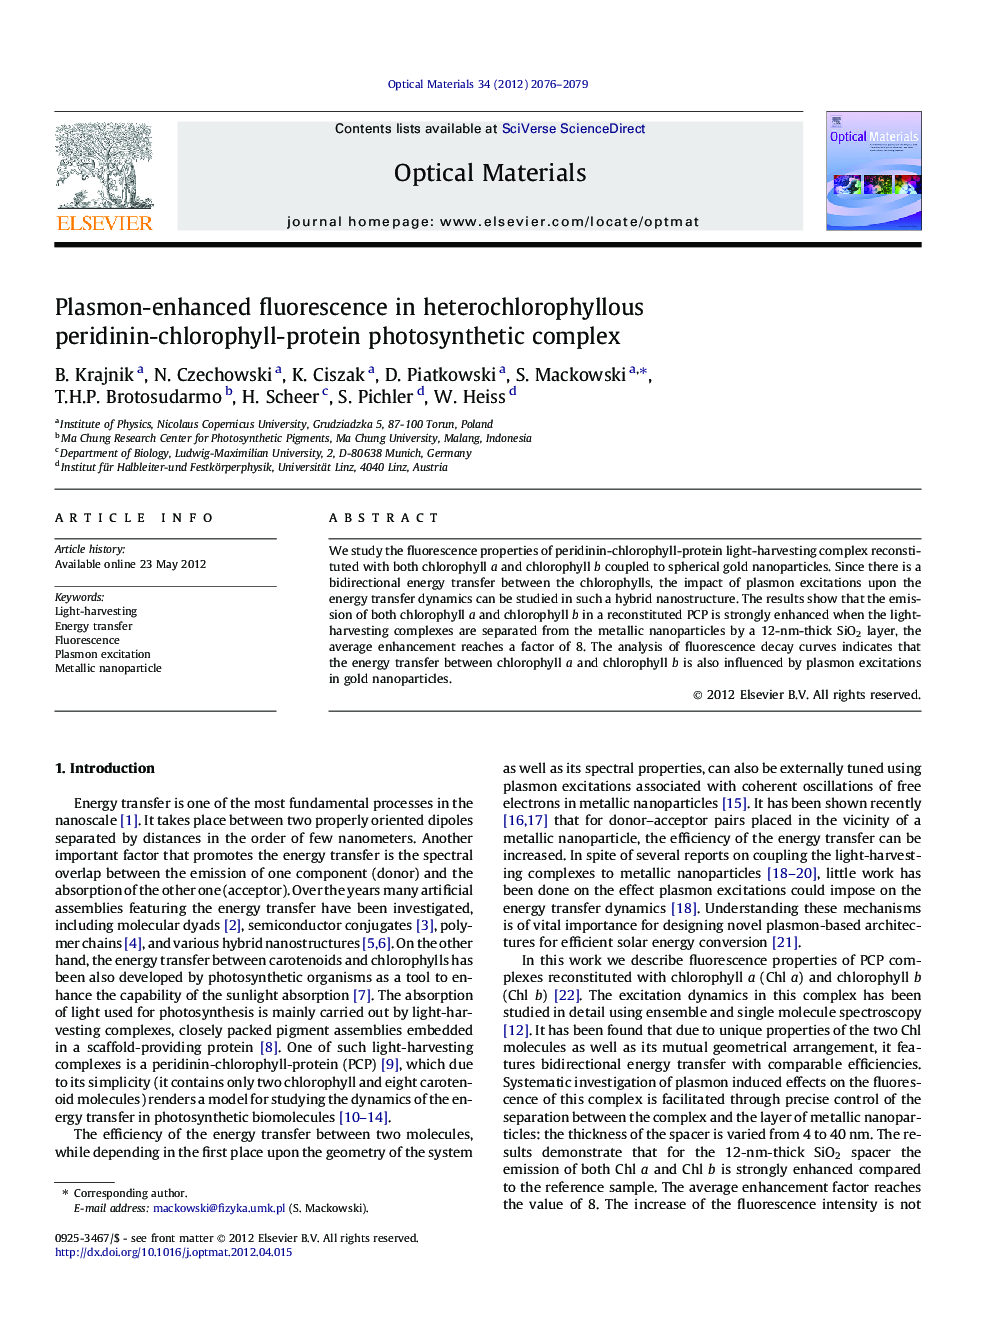 Plasmon-enhanced fluorescence in heterochlorophyllous peridinin-chlorophyll-protein photosynthetic complex